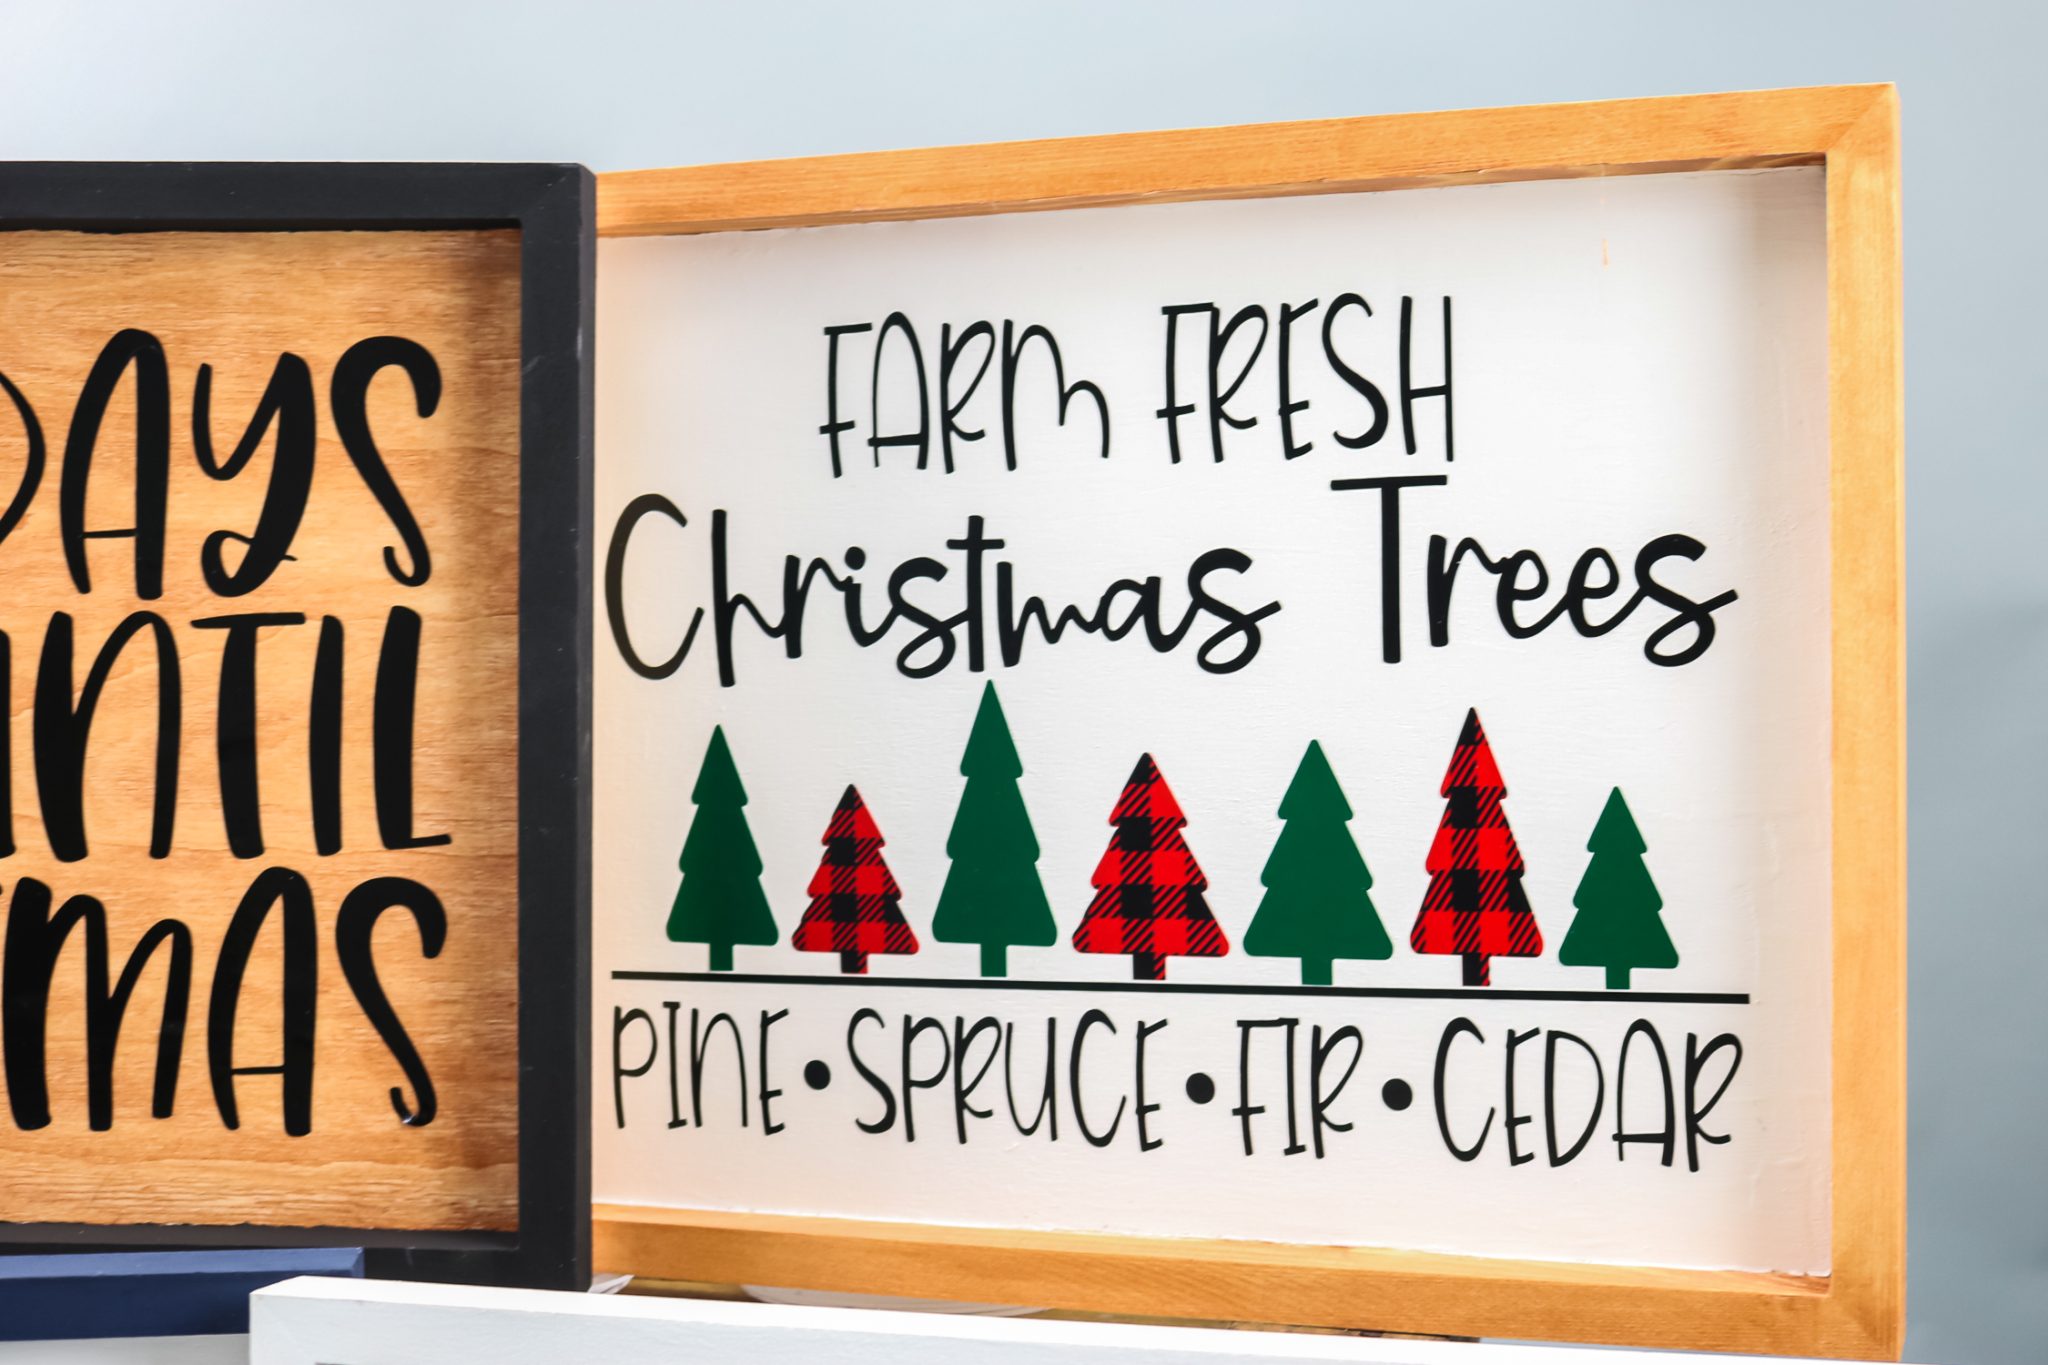 Finished farm fresh Christmas trees sign.